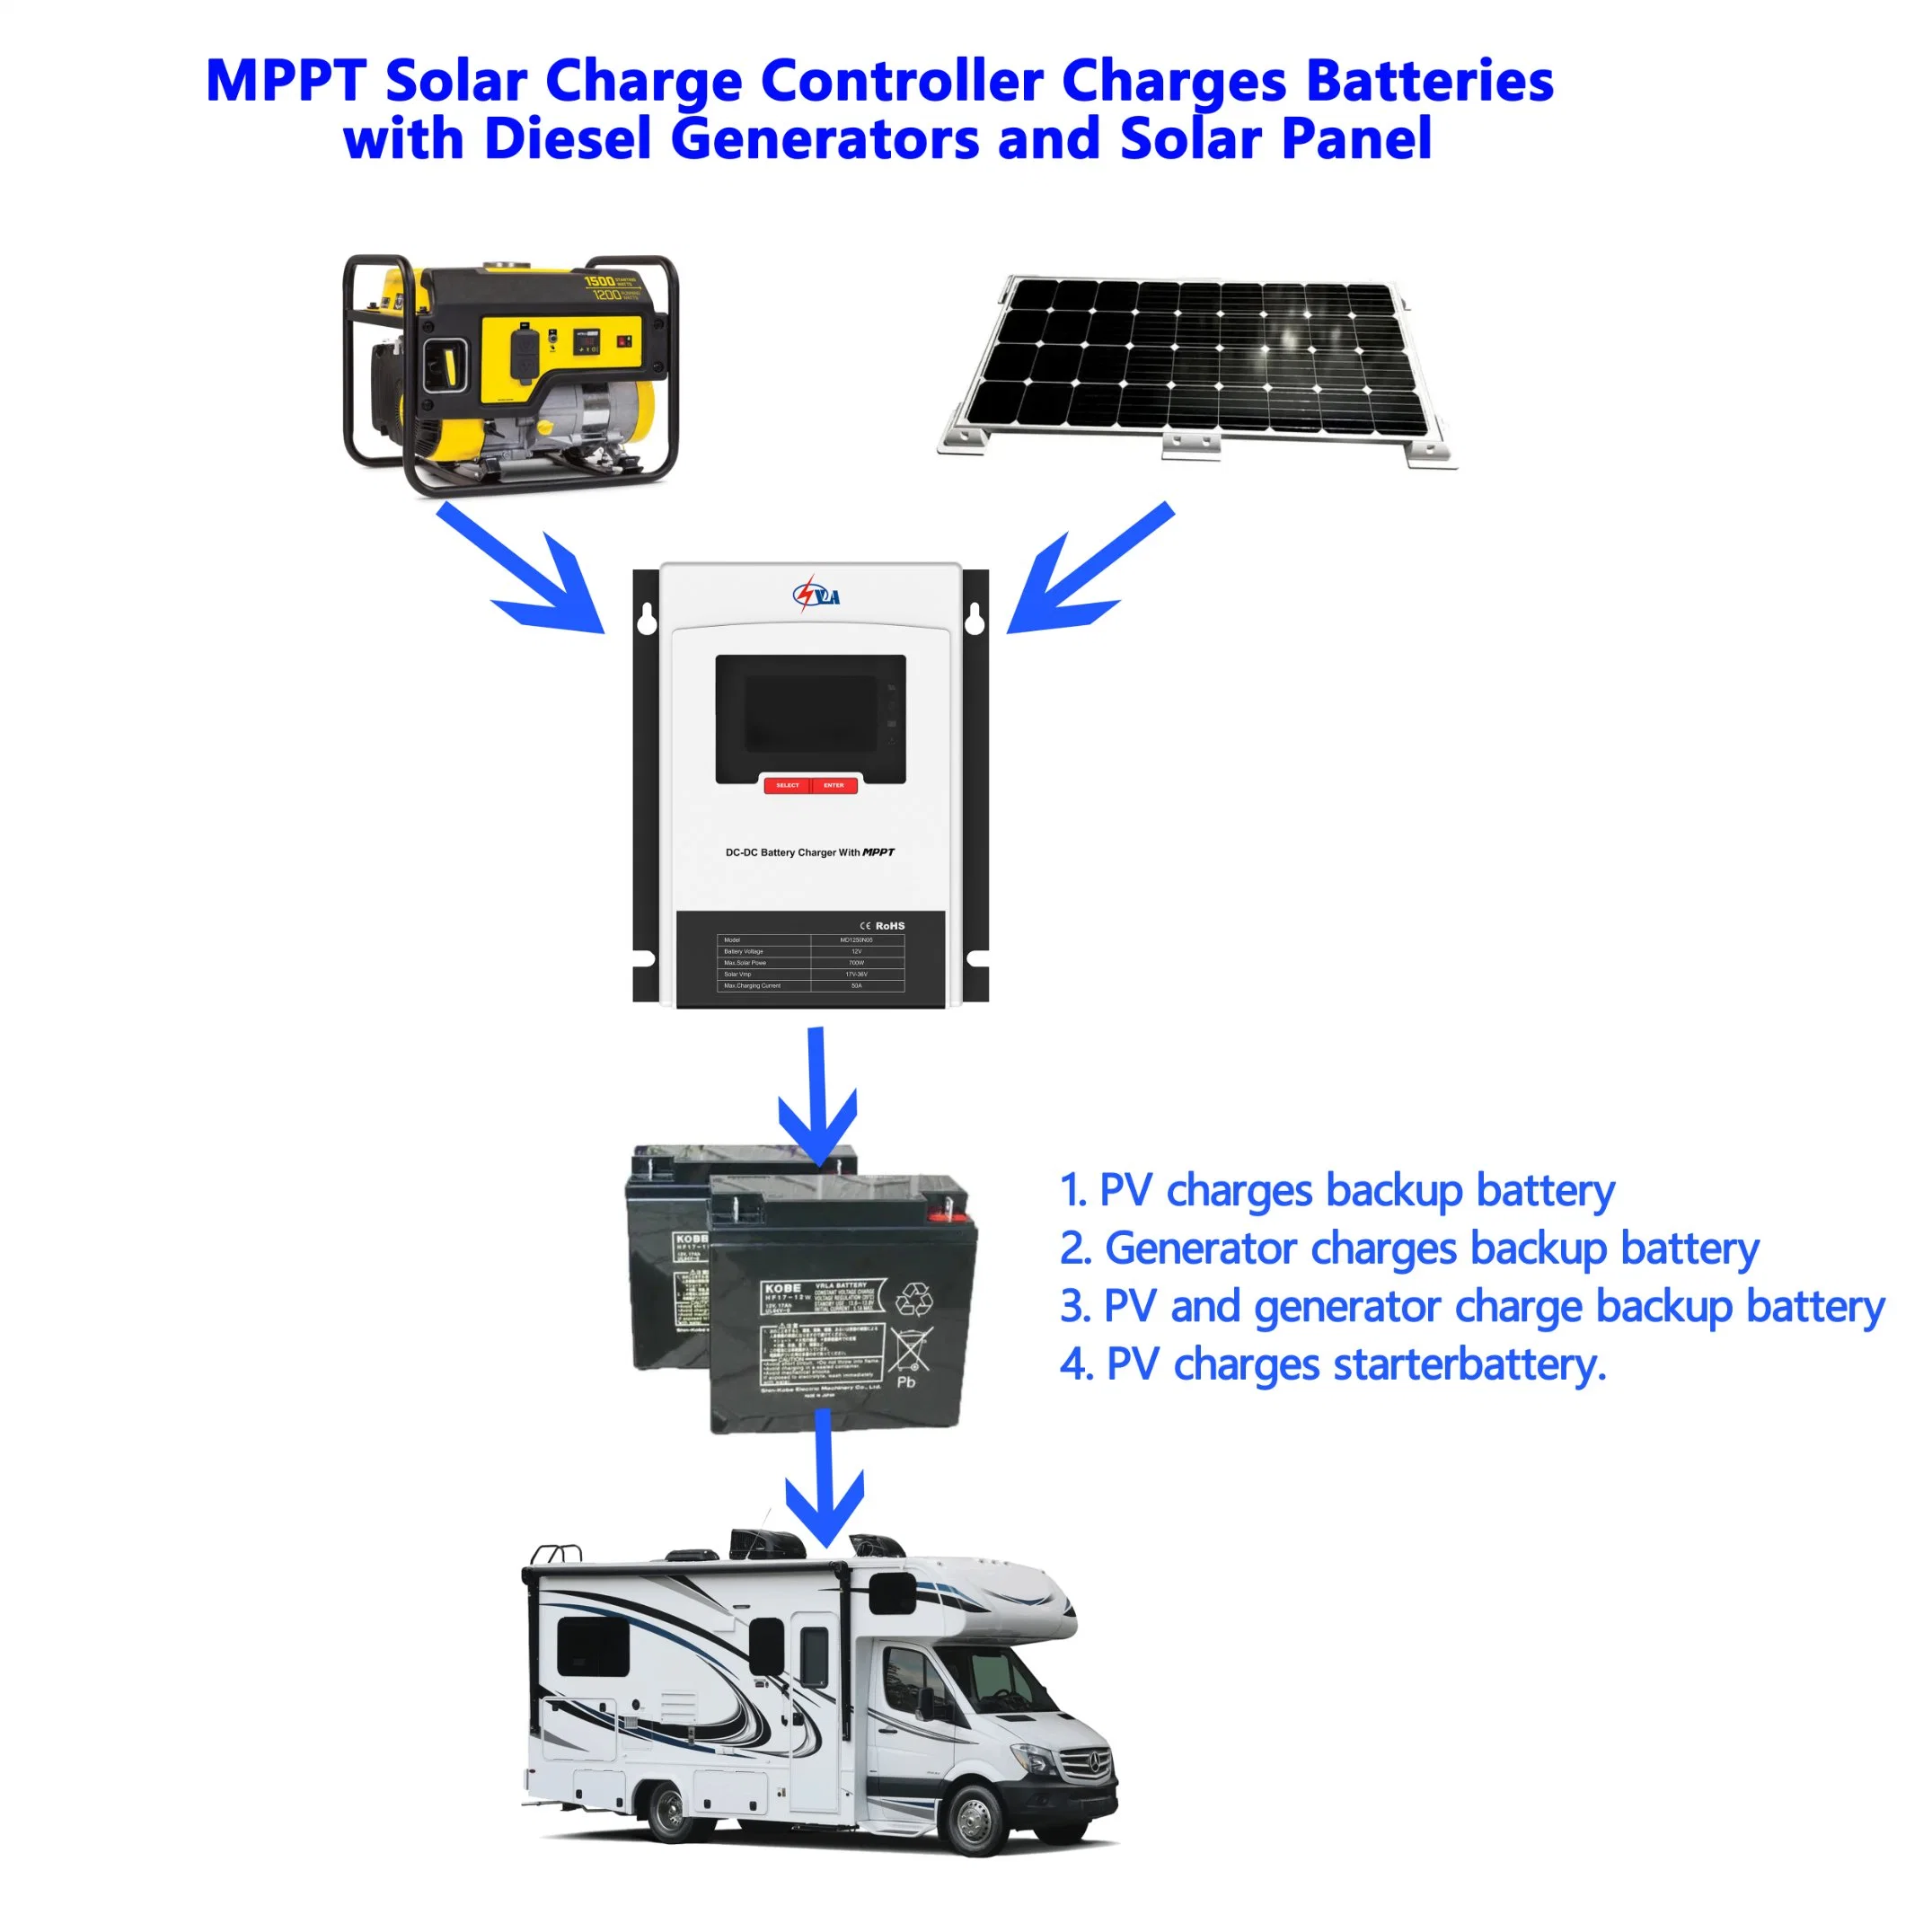 Gerador de carga solar MPPT Connect DC e Painel solar Para a mesma bateria ao mesmo tempo, várias fontes de carga Nova